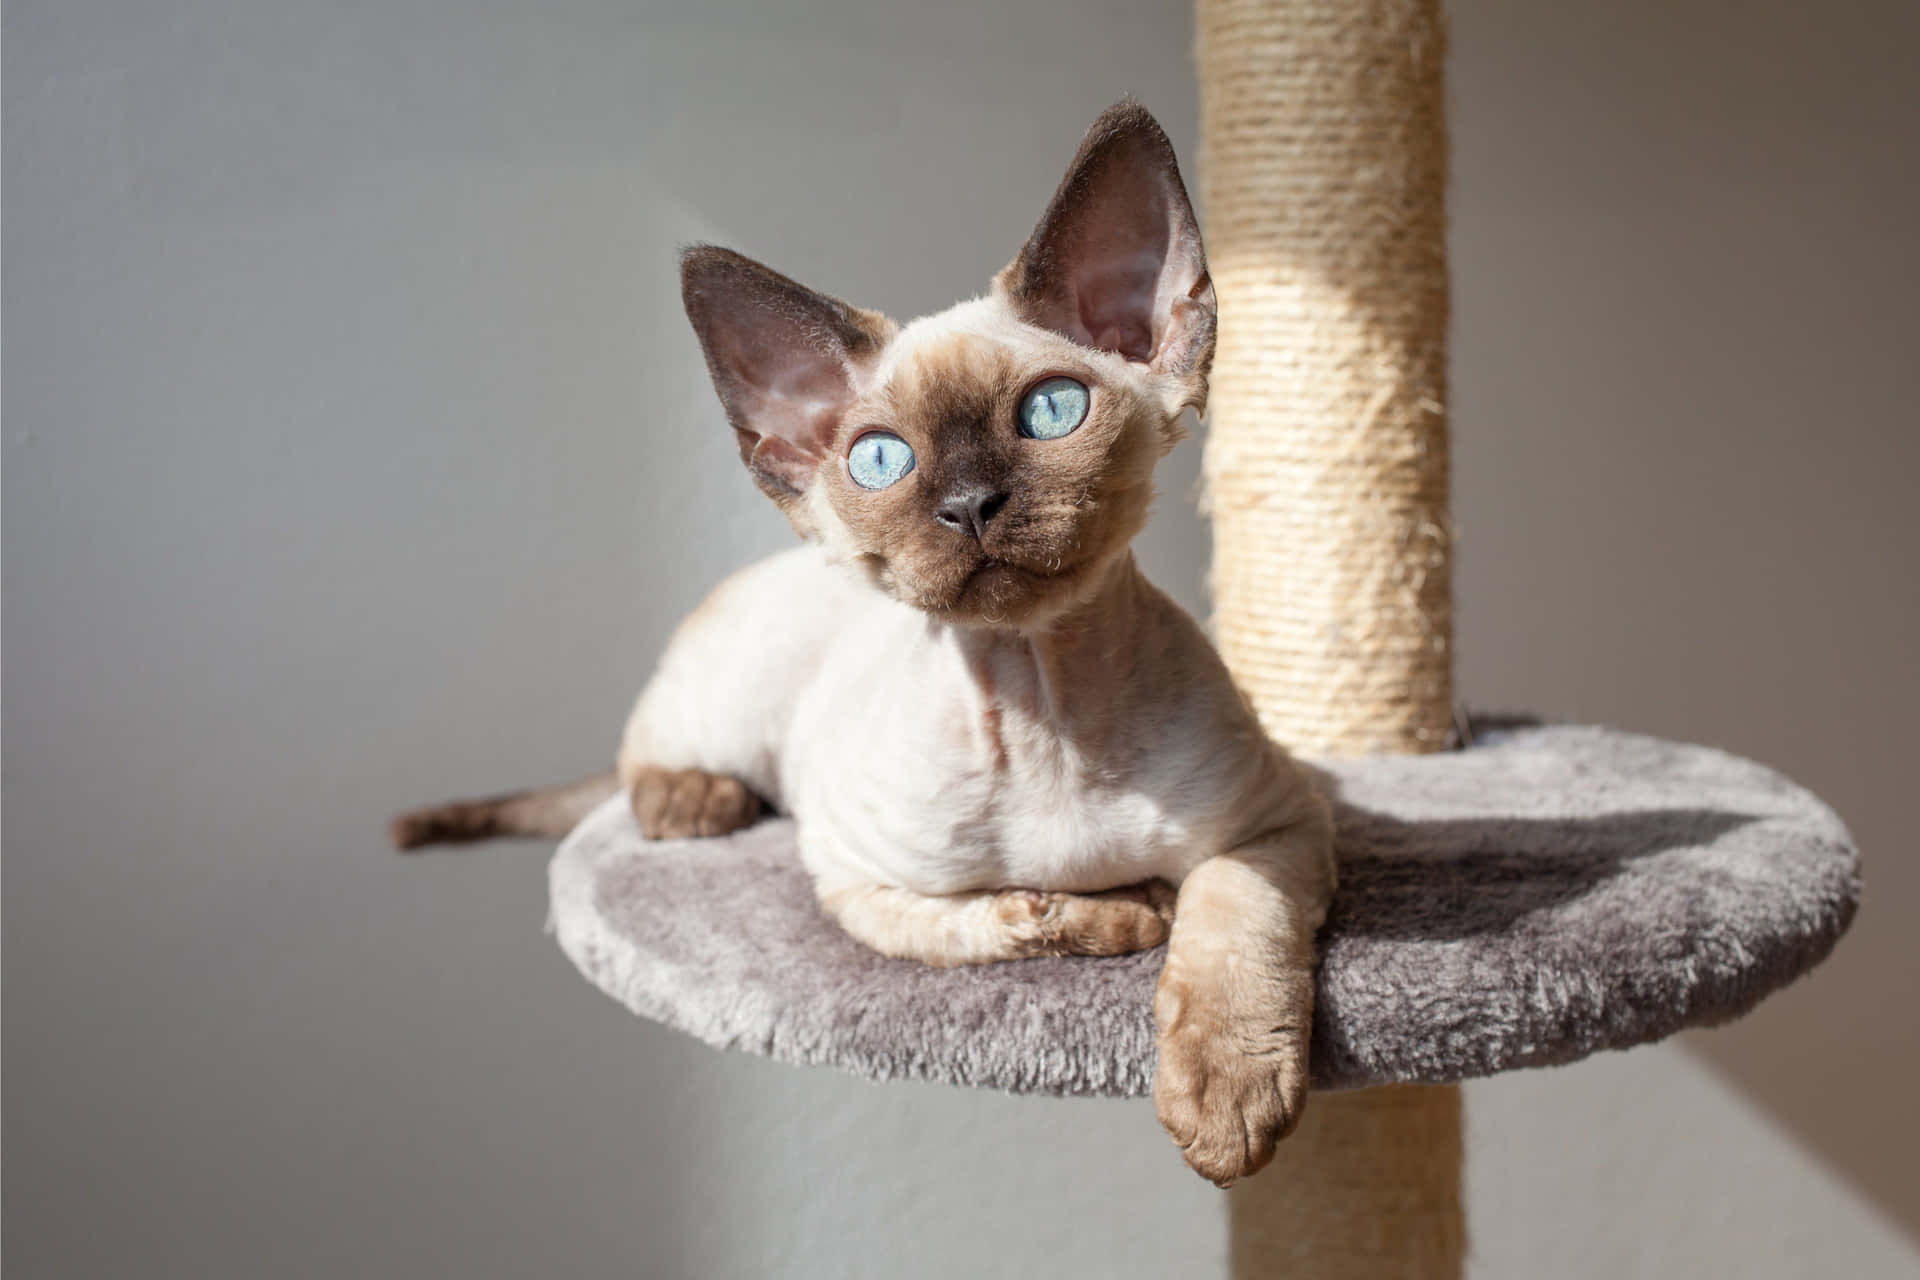 A charming Devon Rex cat resting comfortably indoors Wallpaper